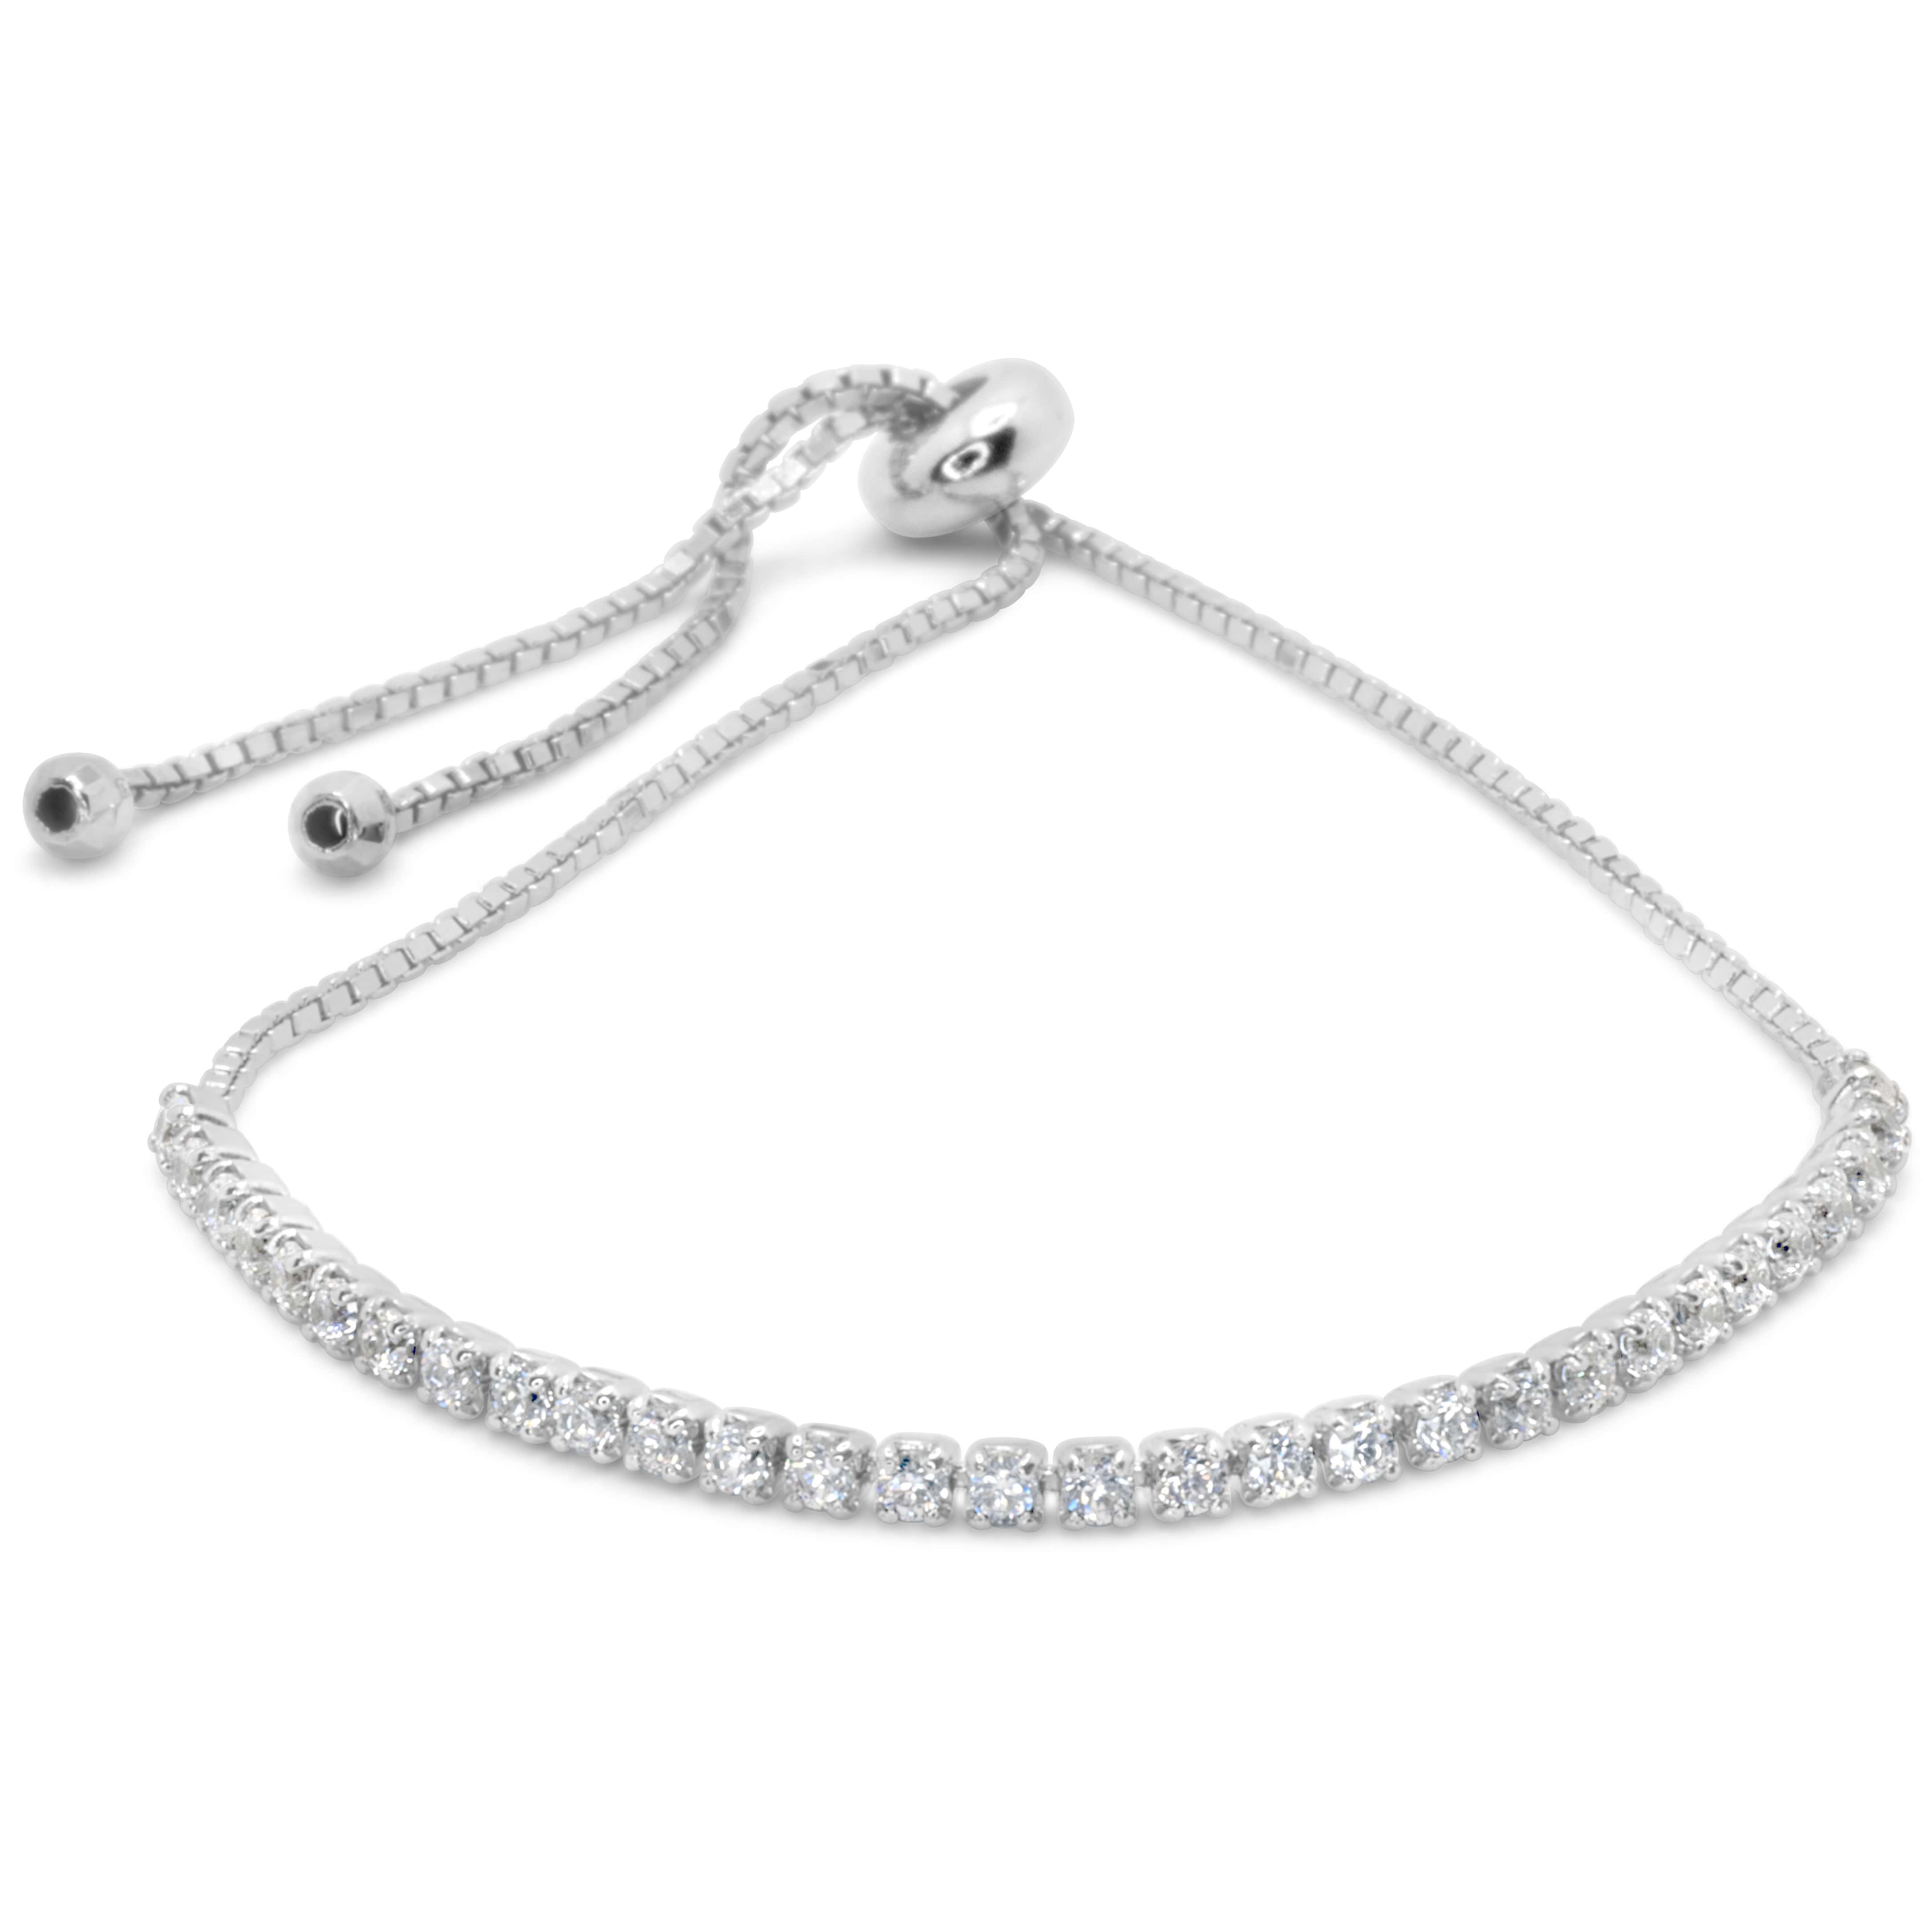 Silver cubic zirconia tennis bracelet